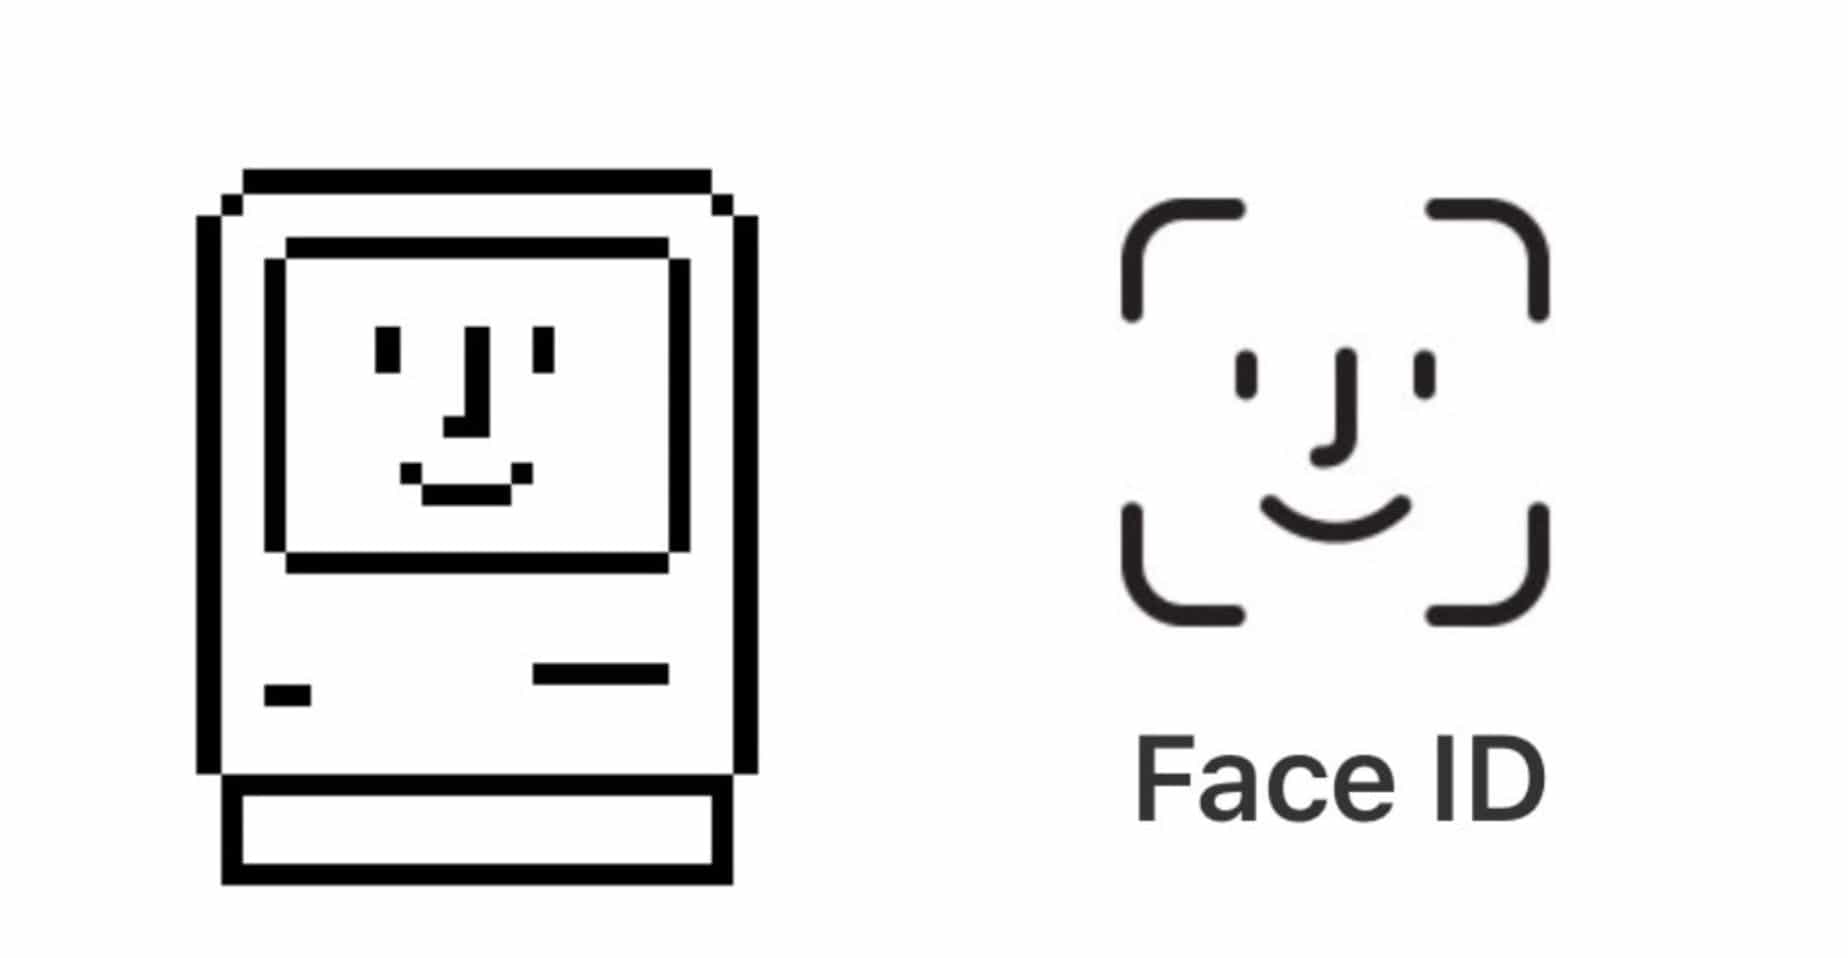 Old Macintosh Logo - Face ID logo resurrects a classic Macintosh icon | Cult of Mac